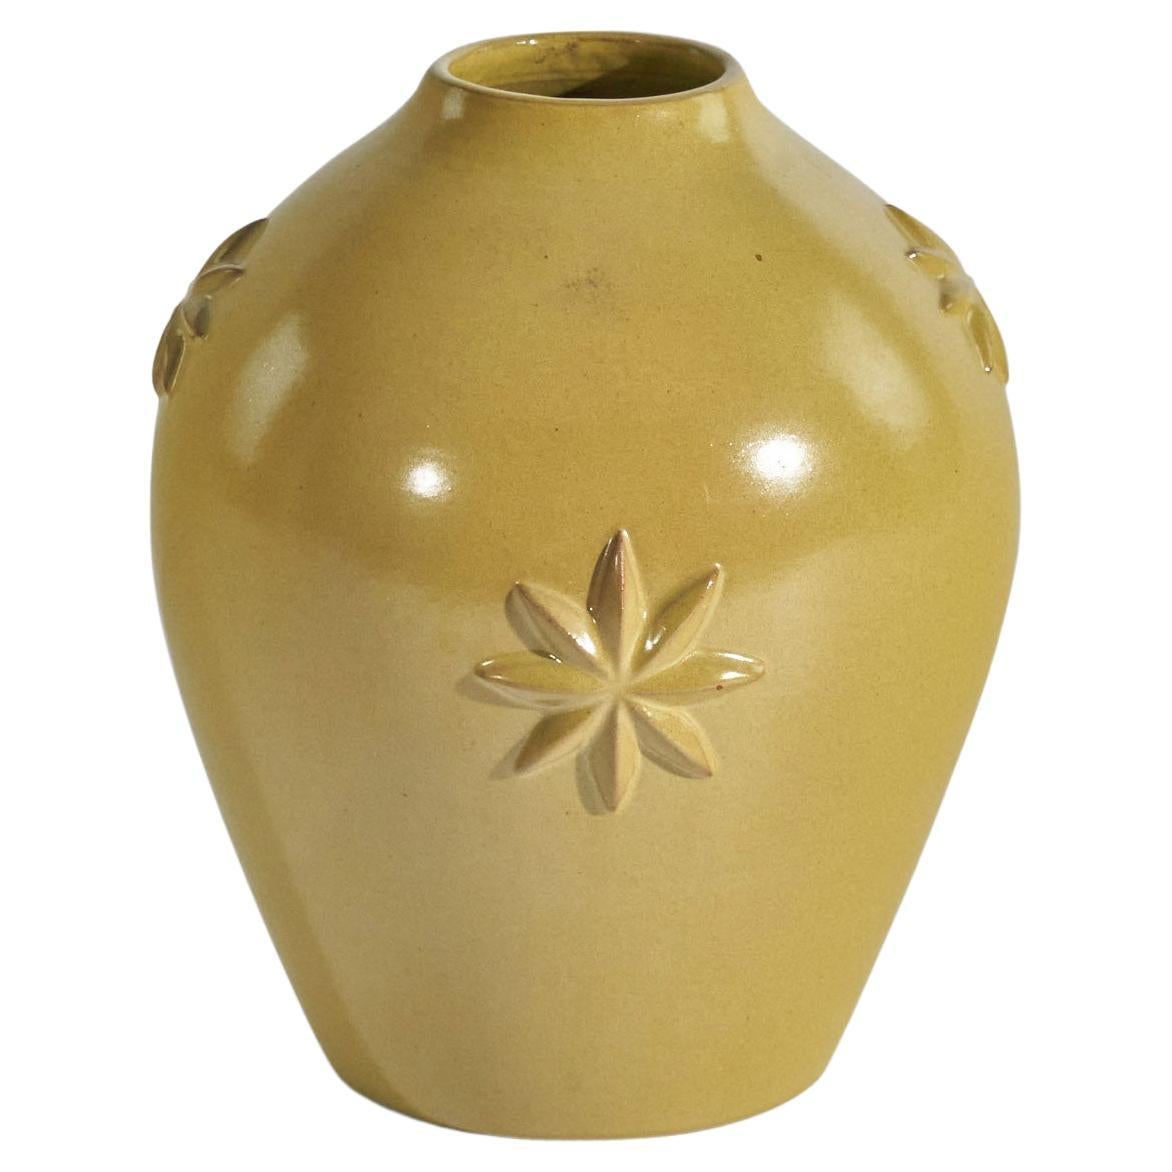 Jerk Werkmäster, Vase, Yellow-Glazed Earthenware, Nittsjö, Sweden, 1940s